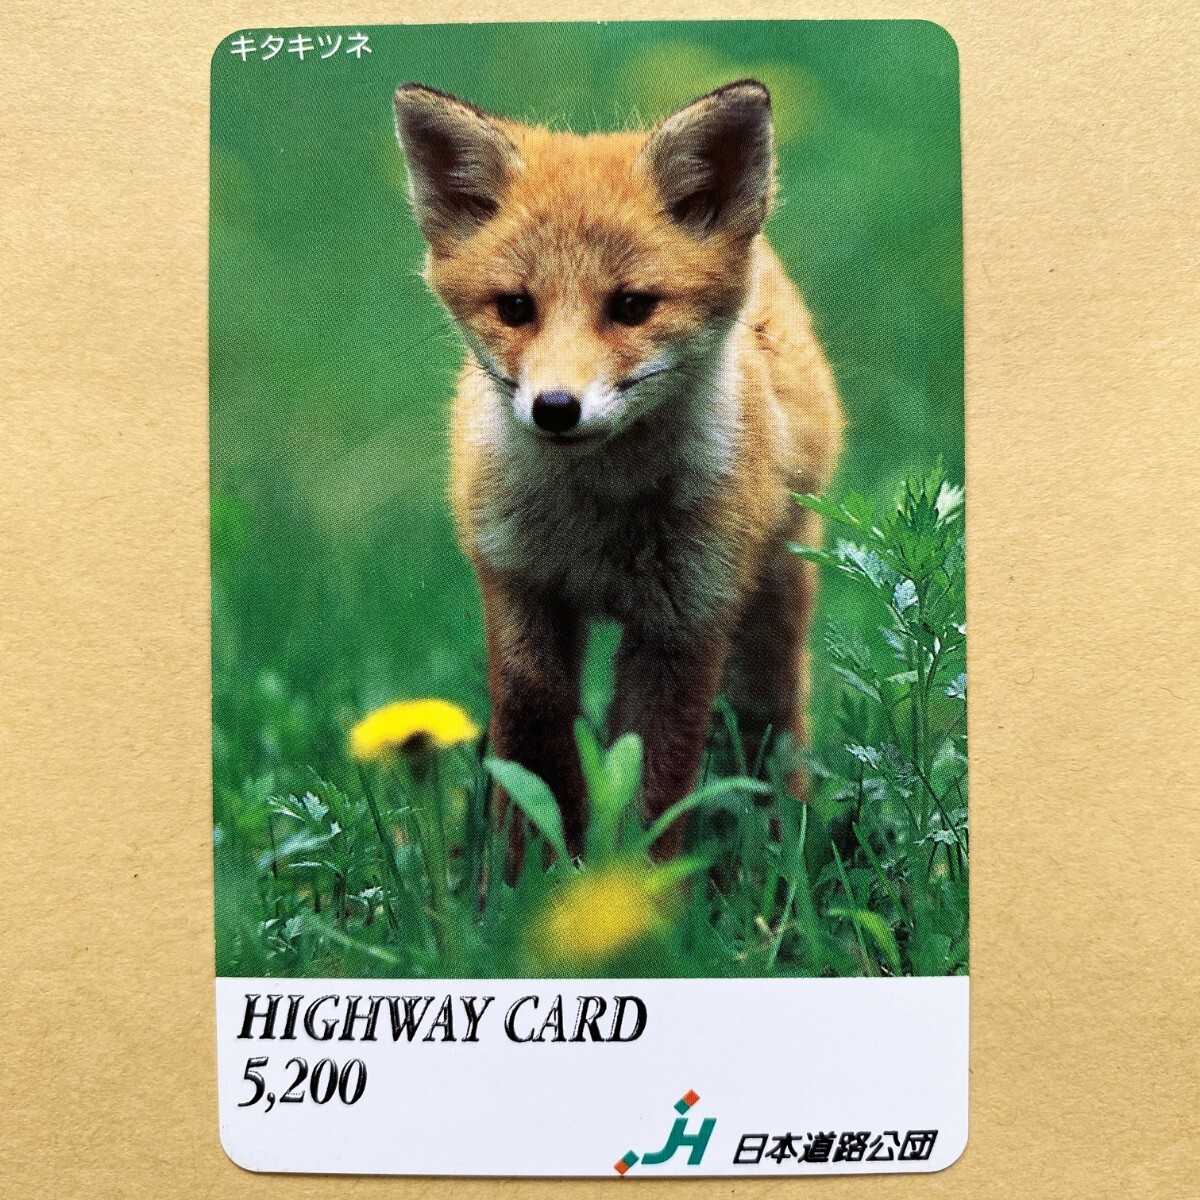 [ used ] highway card Japan road .. kita kitsune 